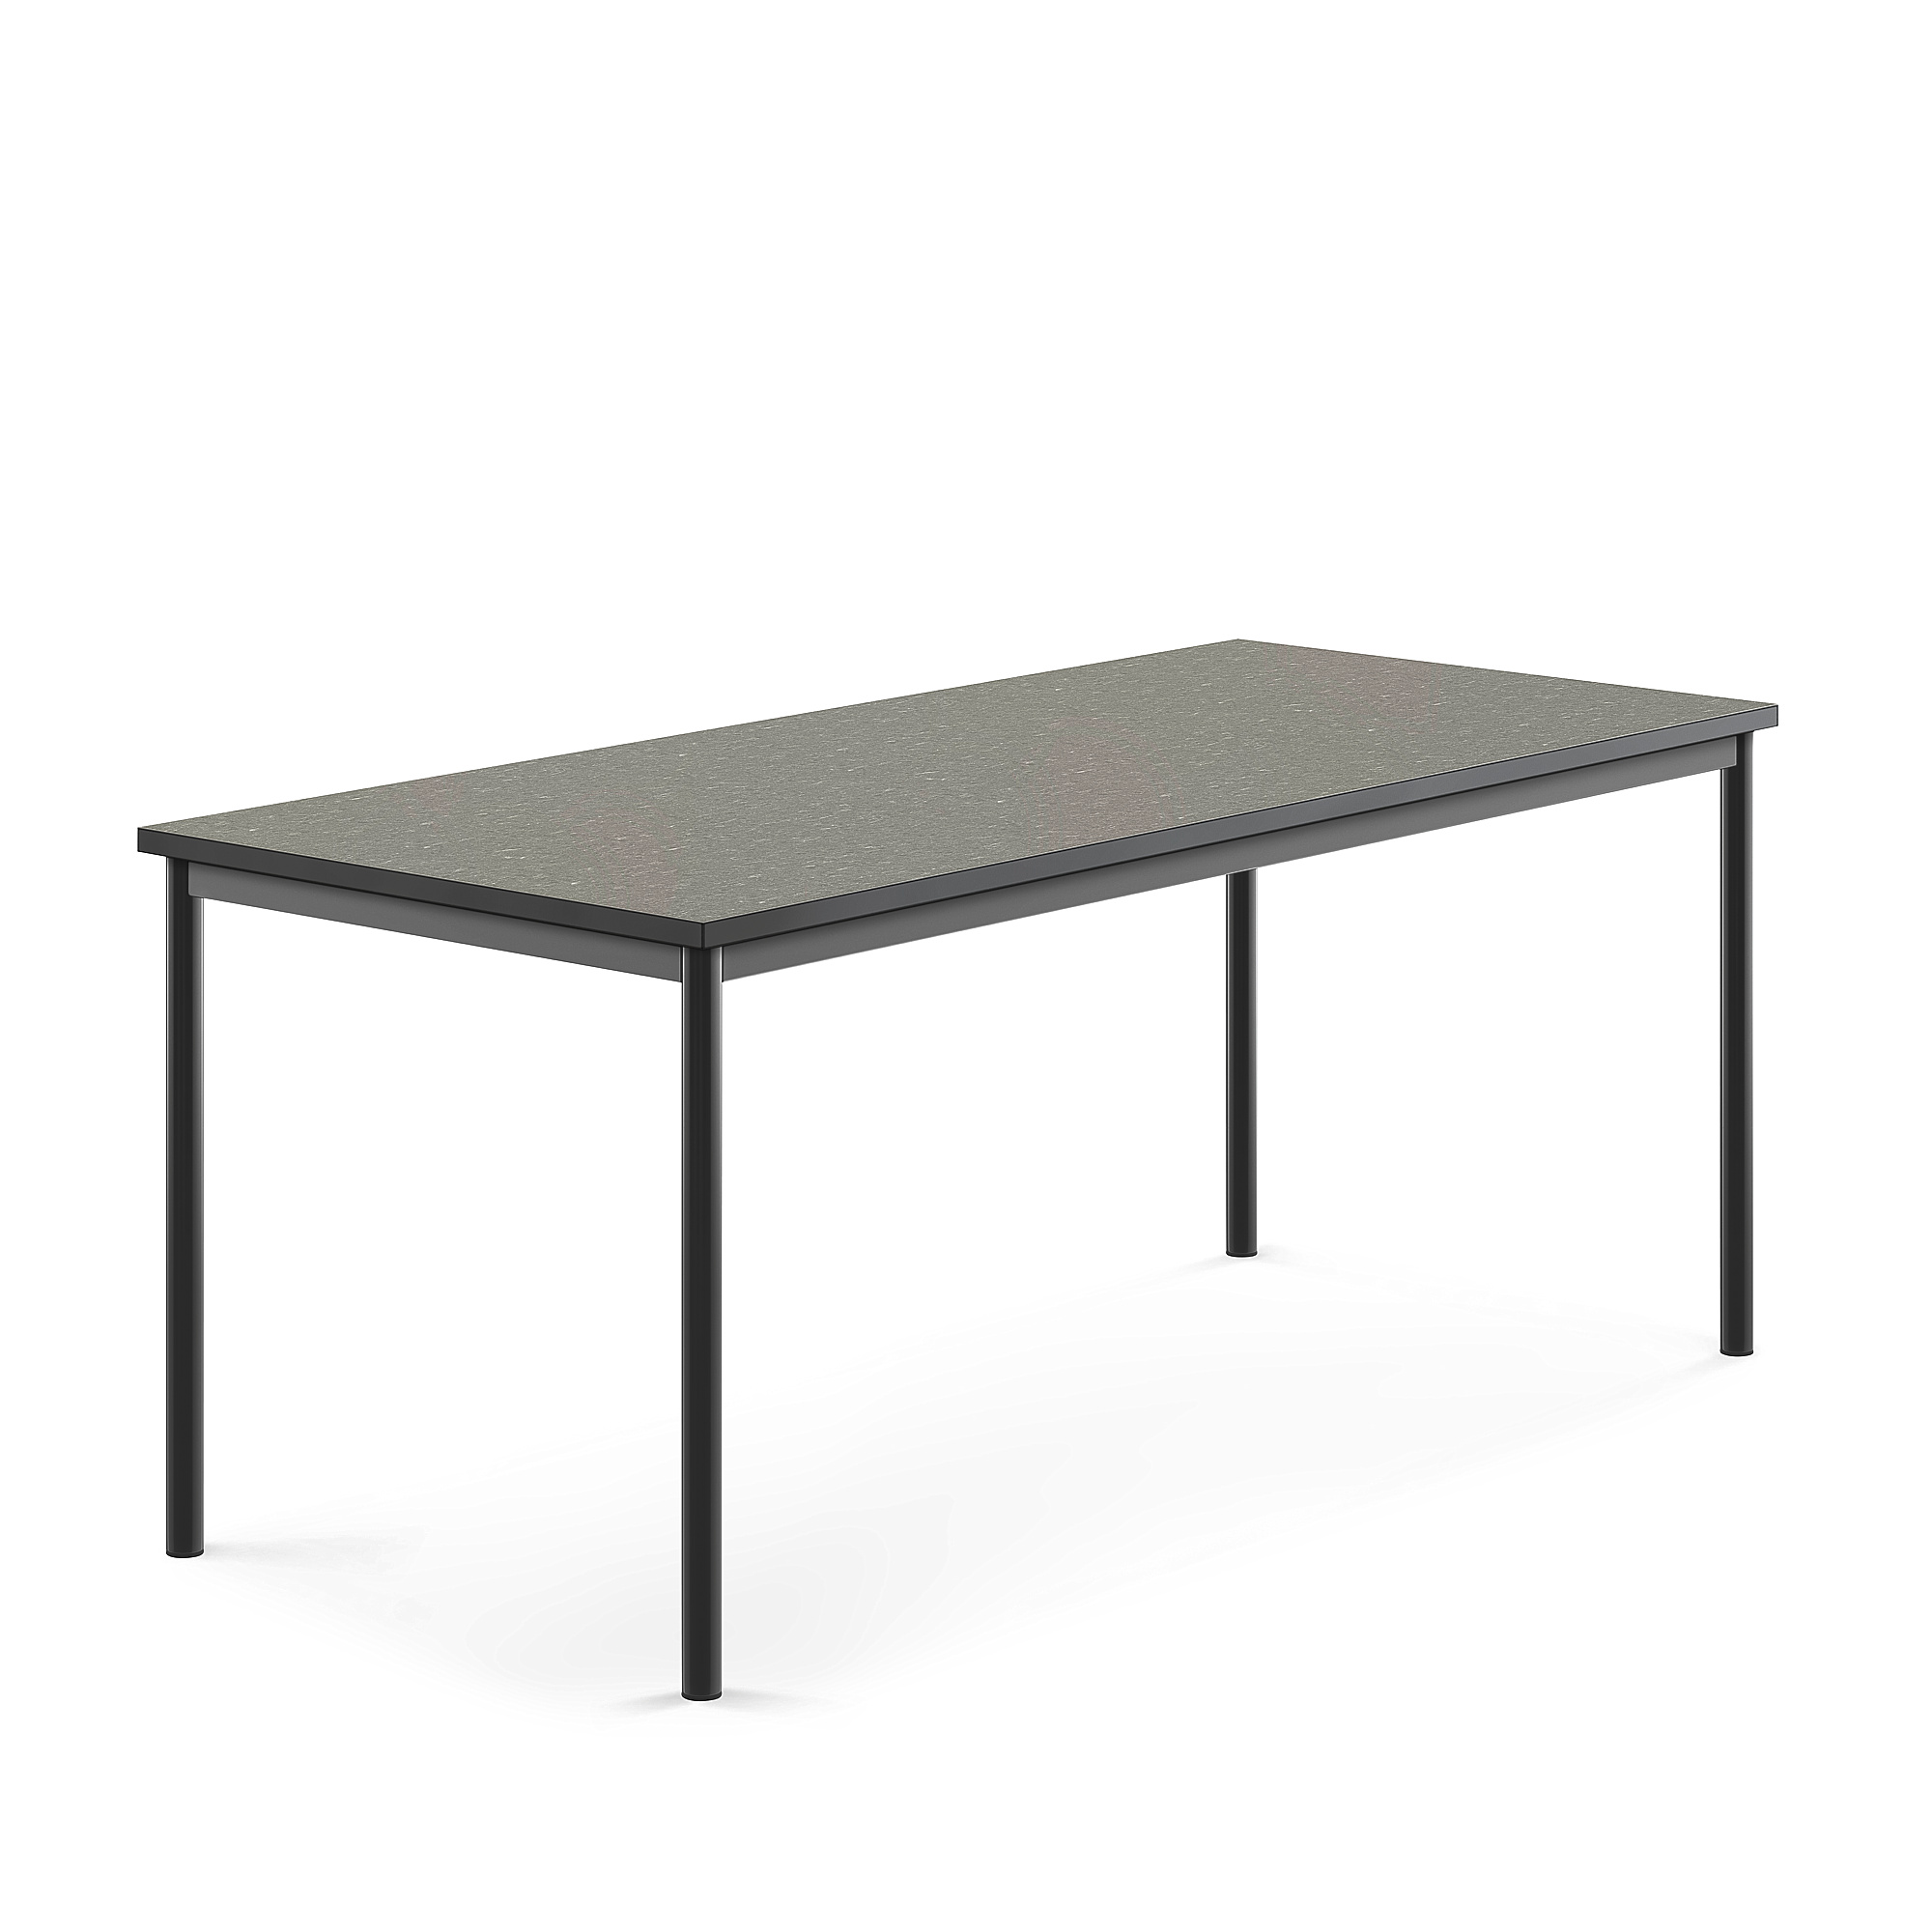 Stůl SONITUS, 1800x800x720 mm, antracitově šedé nohy, deska s linoleem, tmavě šedá